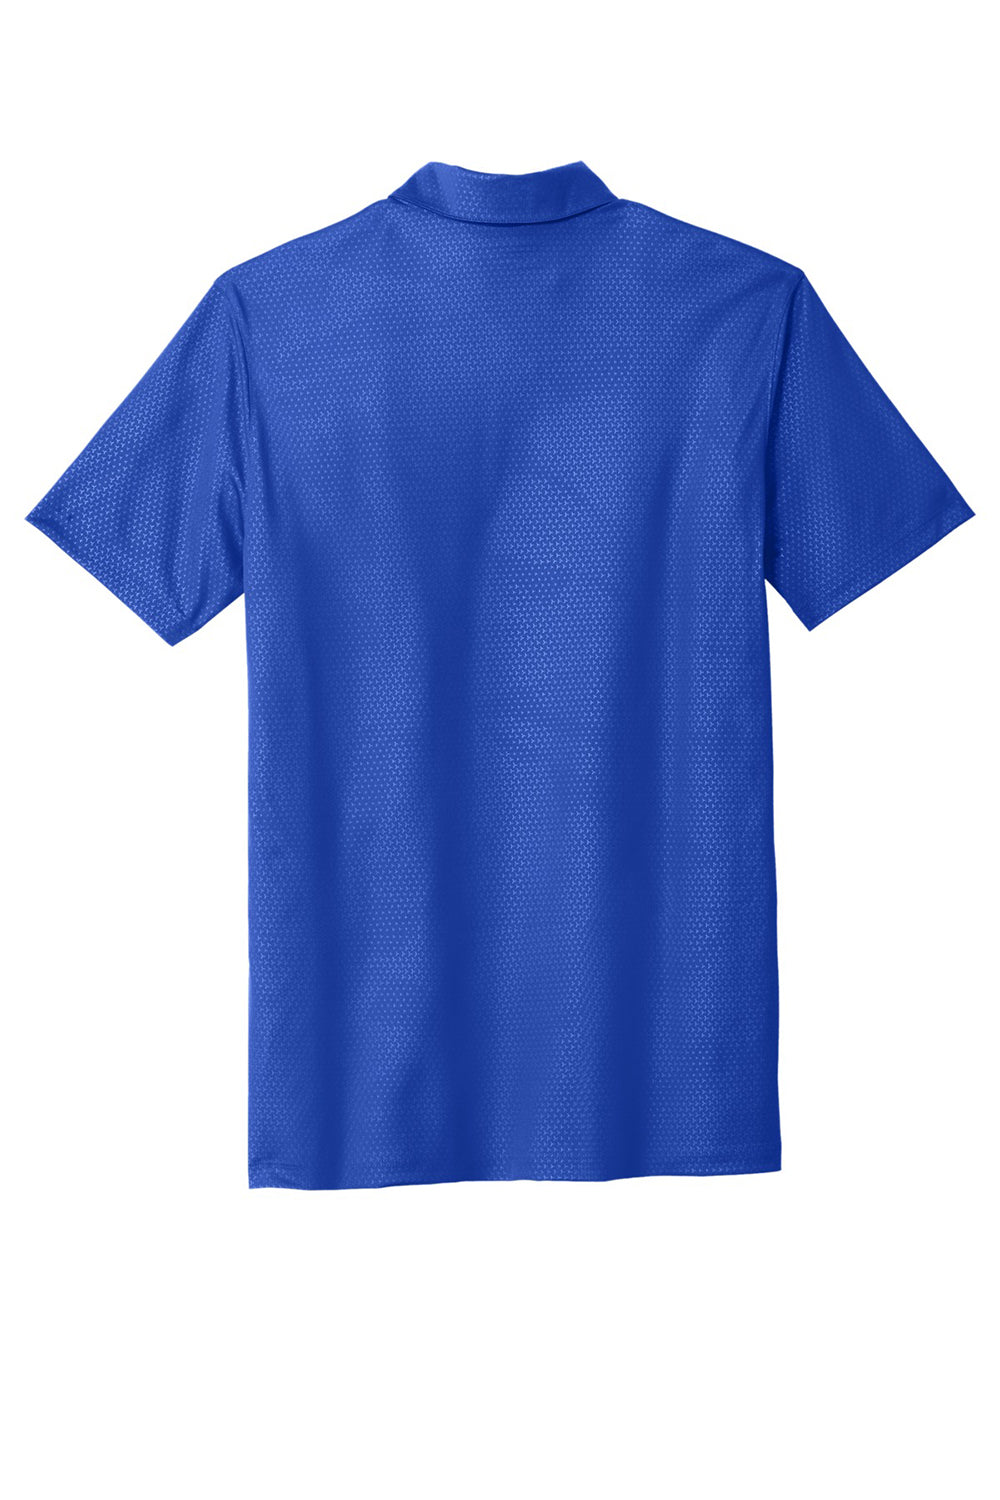 Nike 838964 Mens Dri-Fit Moisture Wicking Short Sleeve Polo Shirt Old Royal Blue Flat Back